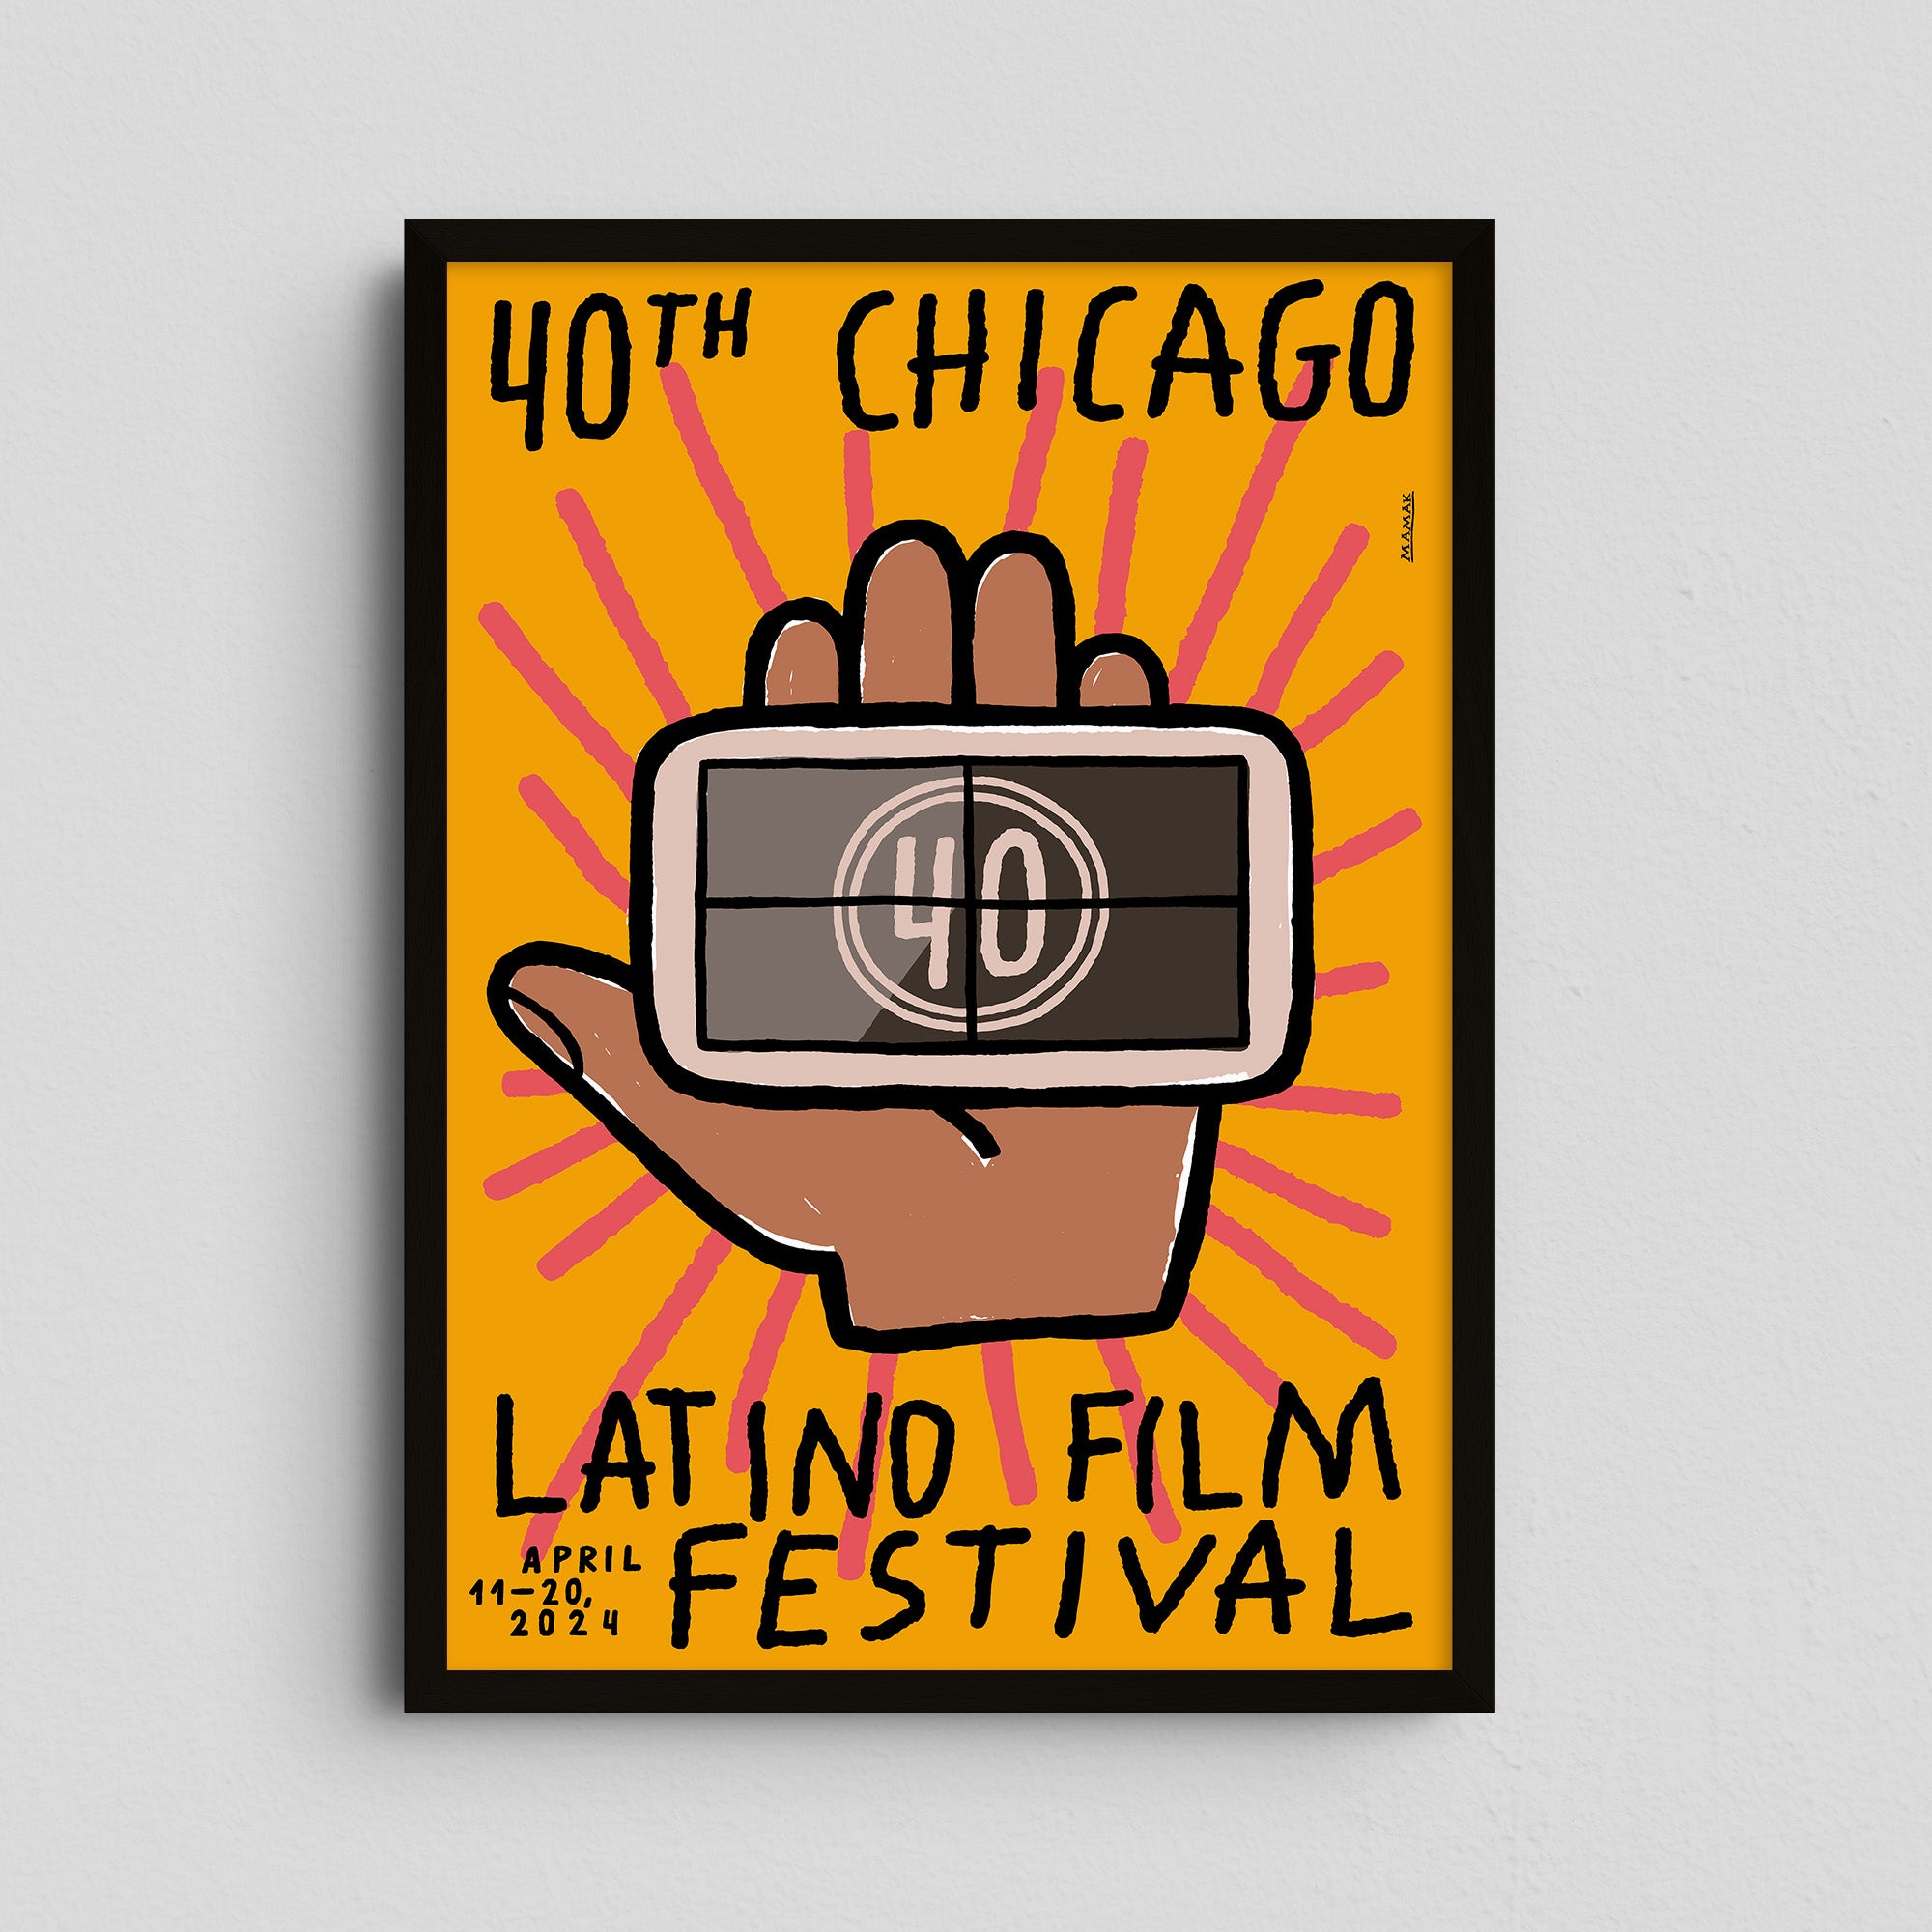 Chicago Latino Film Festival - Bartosz Mamak